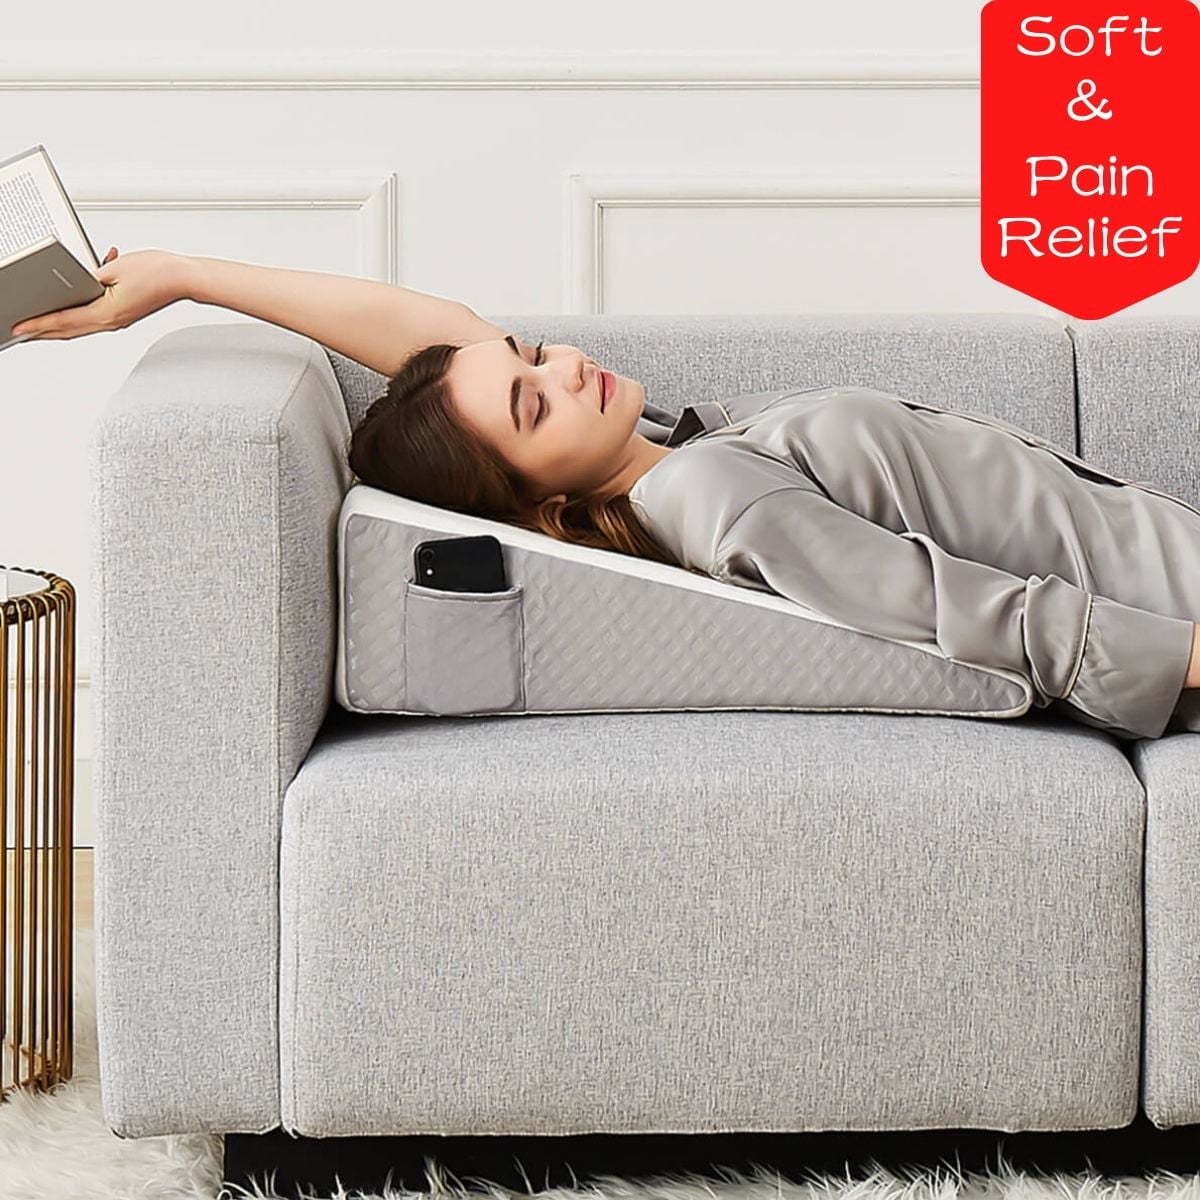 Ondekt Bed Wedge Pillow Multipurpose Adjustable Leg Support Pillow Cooling Gel Memory Foam Top - Helps for Acid Reflux Heartburn, Allergies, Snoring